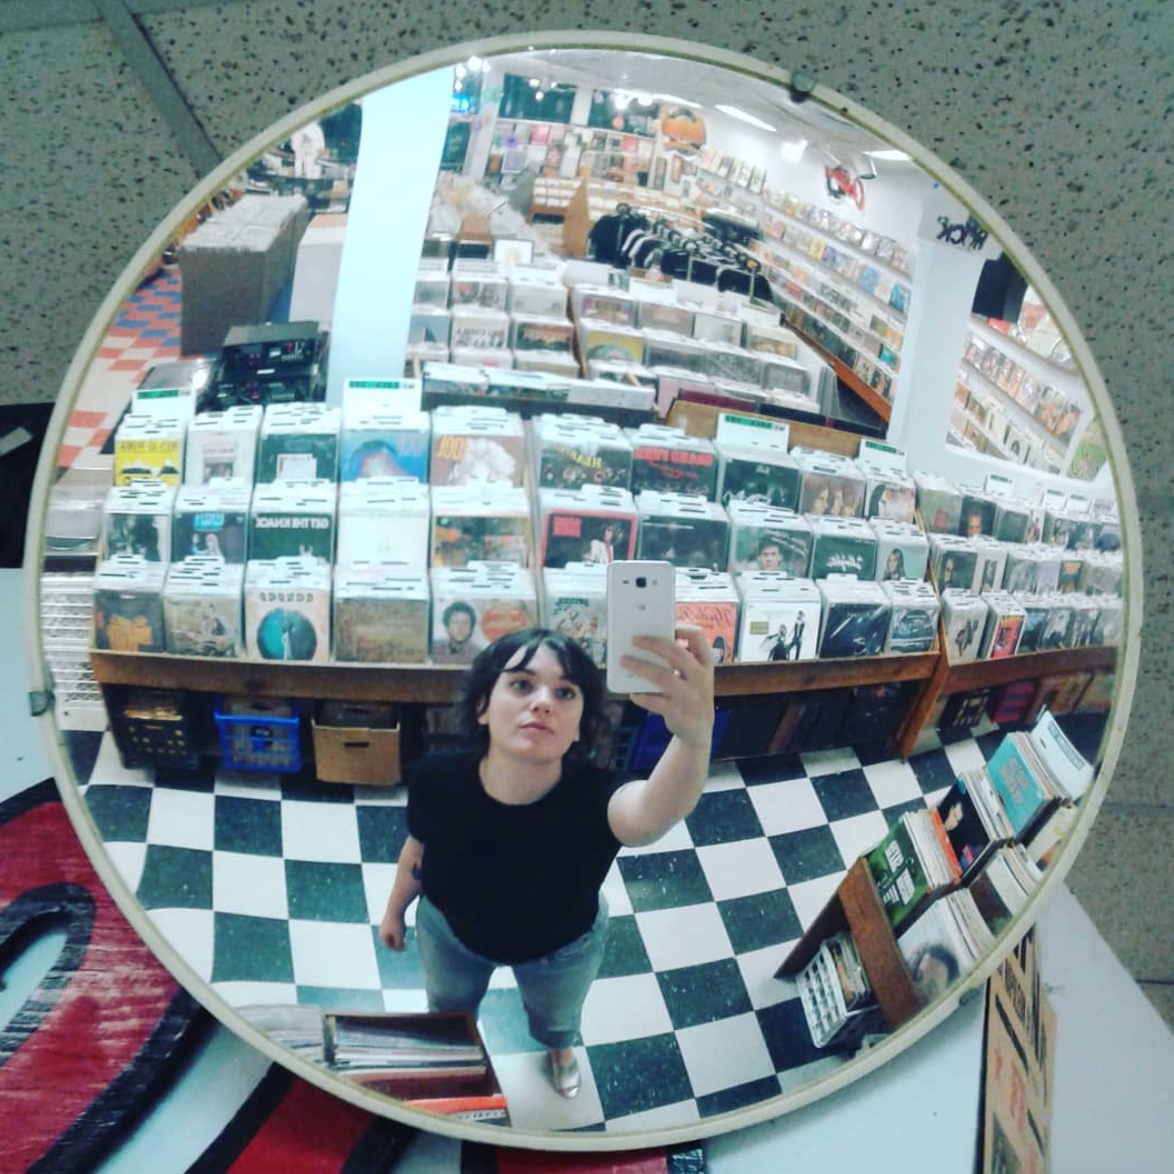 Antone’s Record Shop